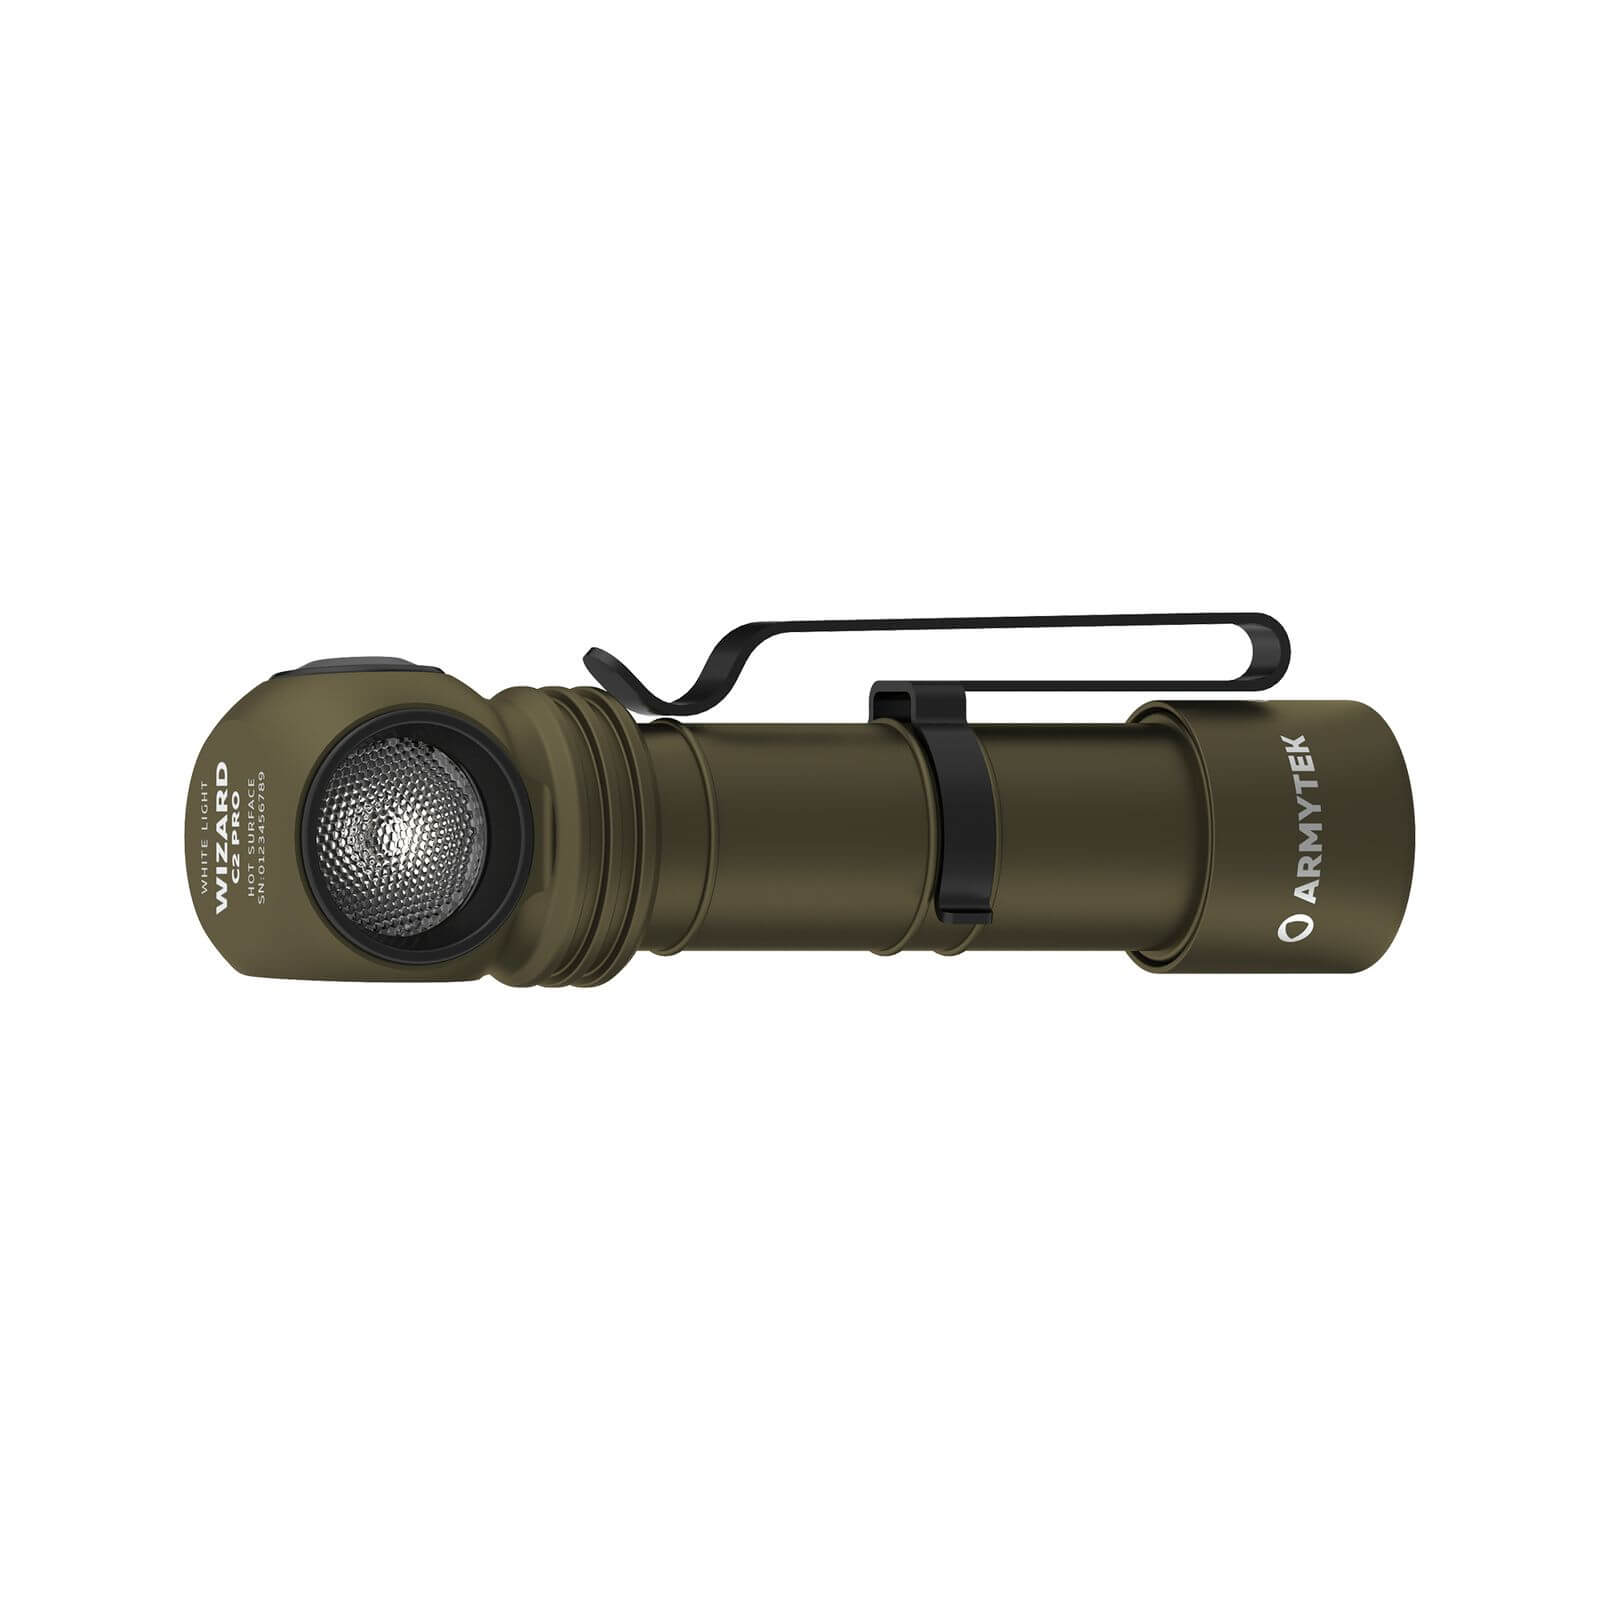 Armytek Wizard C2 Pro LED Stirnlampe oliv kaltweiss Stirnlampe Taschenlampe